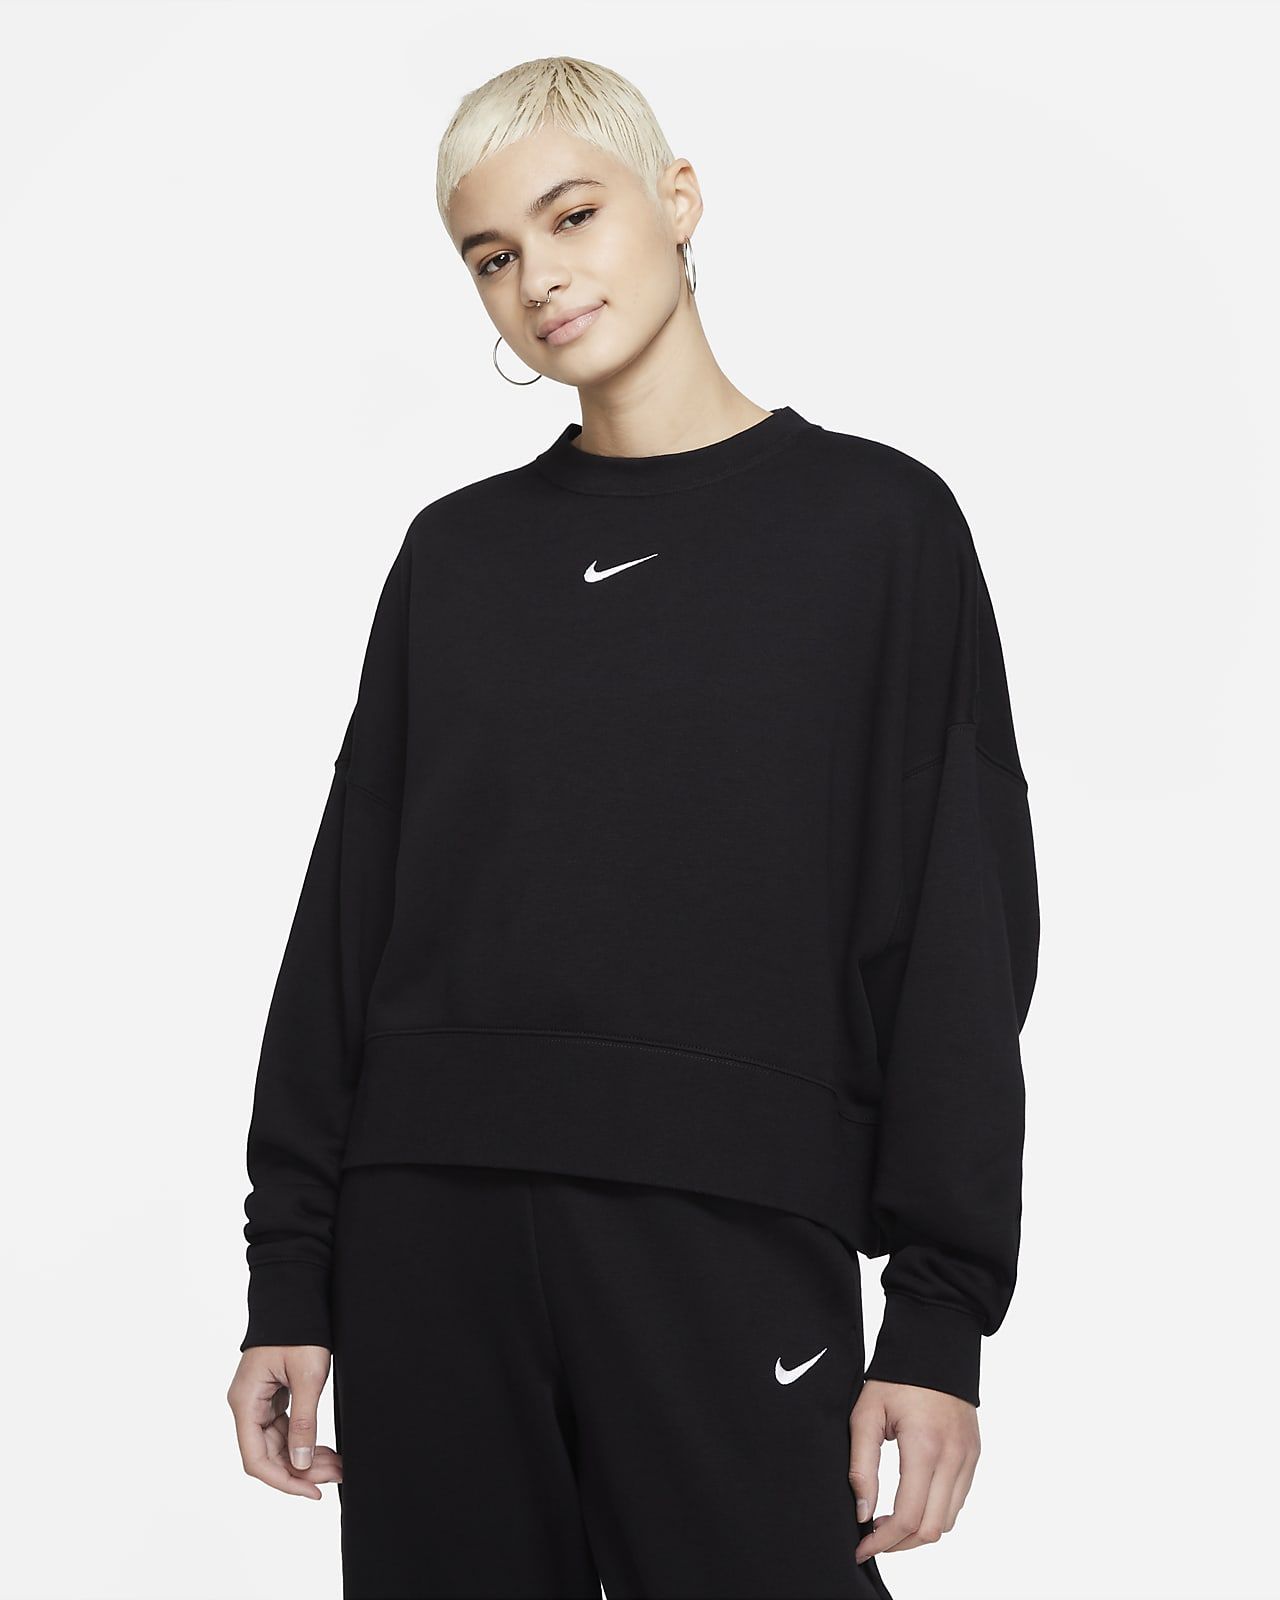 Nike Sportswear Collection EssentialsWomen's Oversized Fleece Crew Sweatshirt$60 | Nike (US)